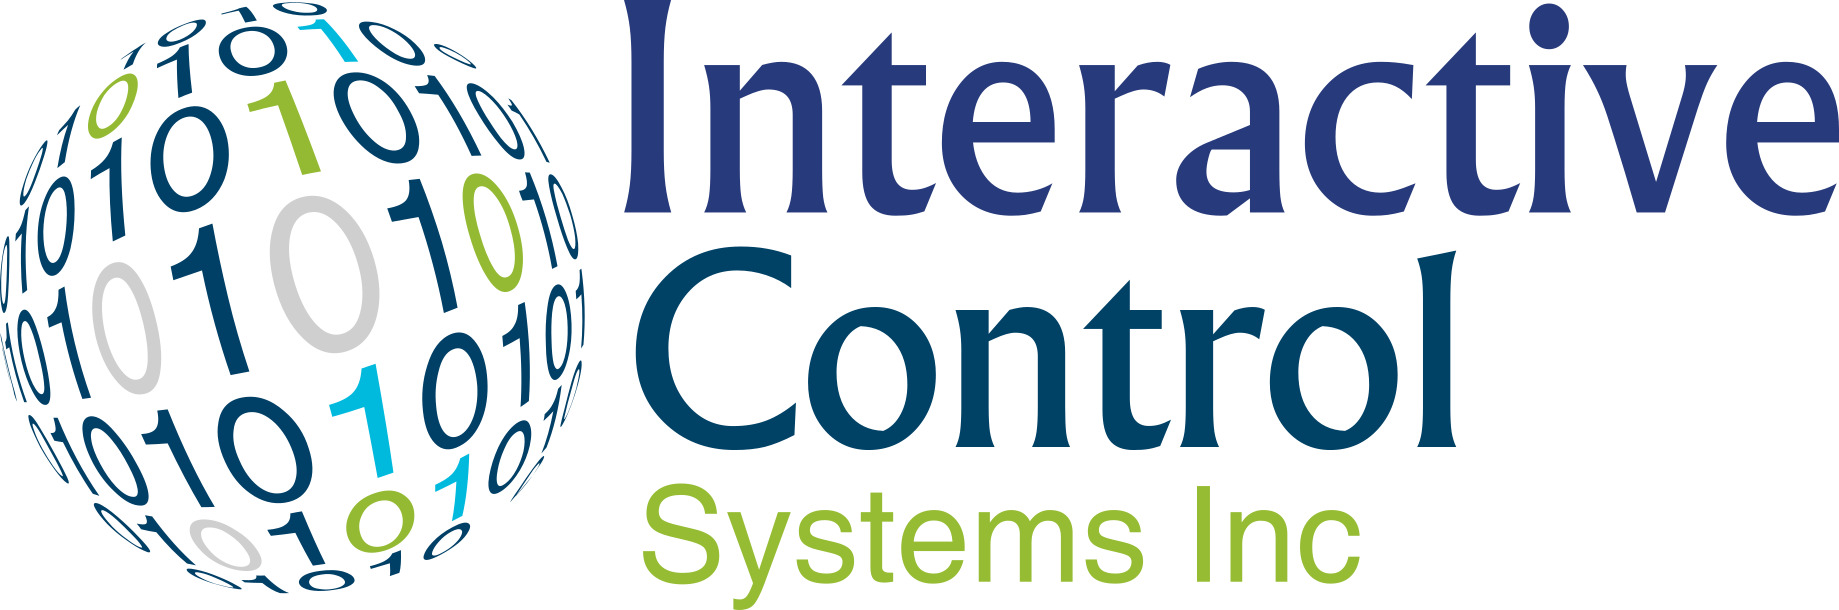 (c) Interactivecontrolsystems.com